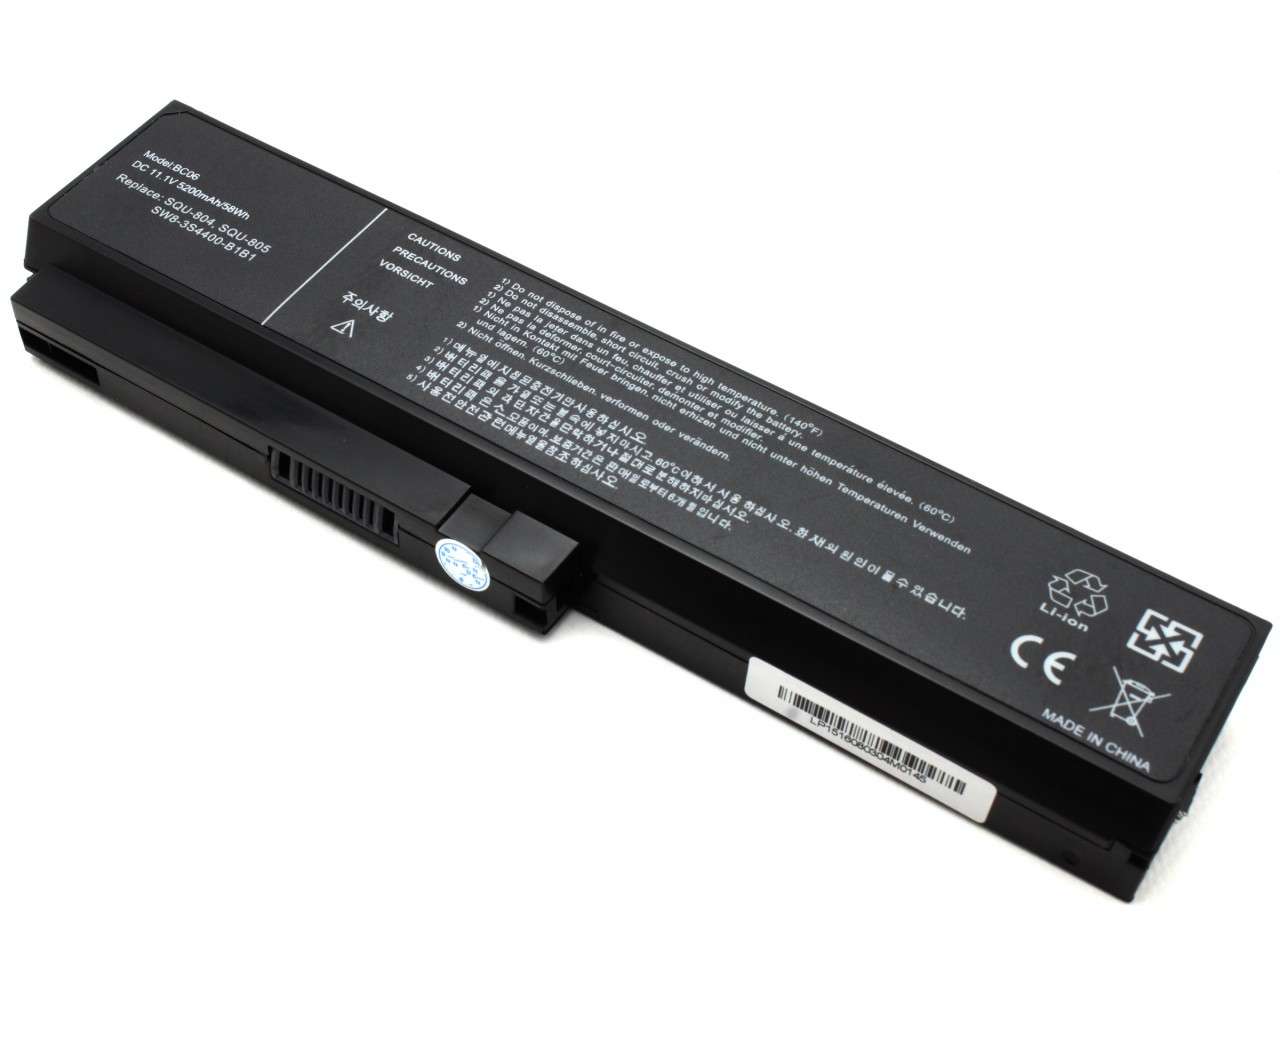 Baterie LG LG R490 LG imagine noua reconect.ro